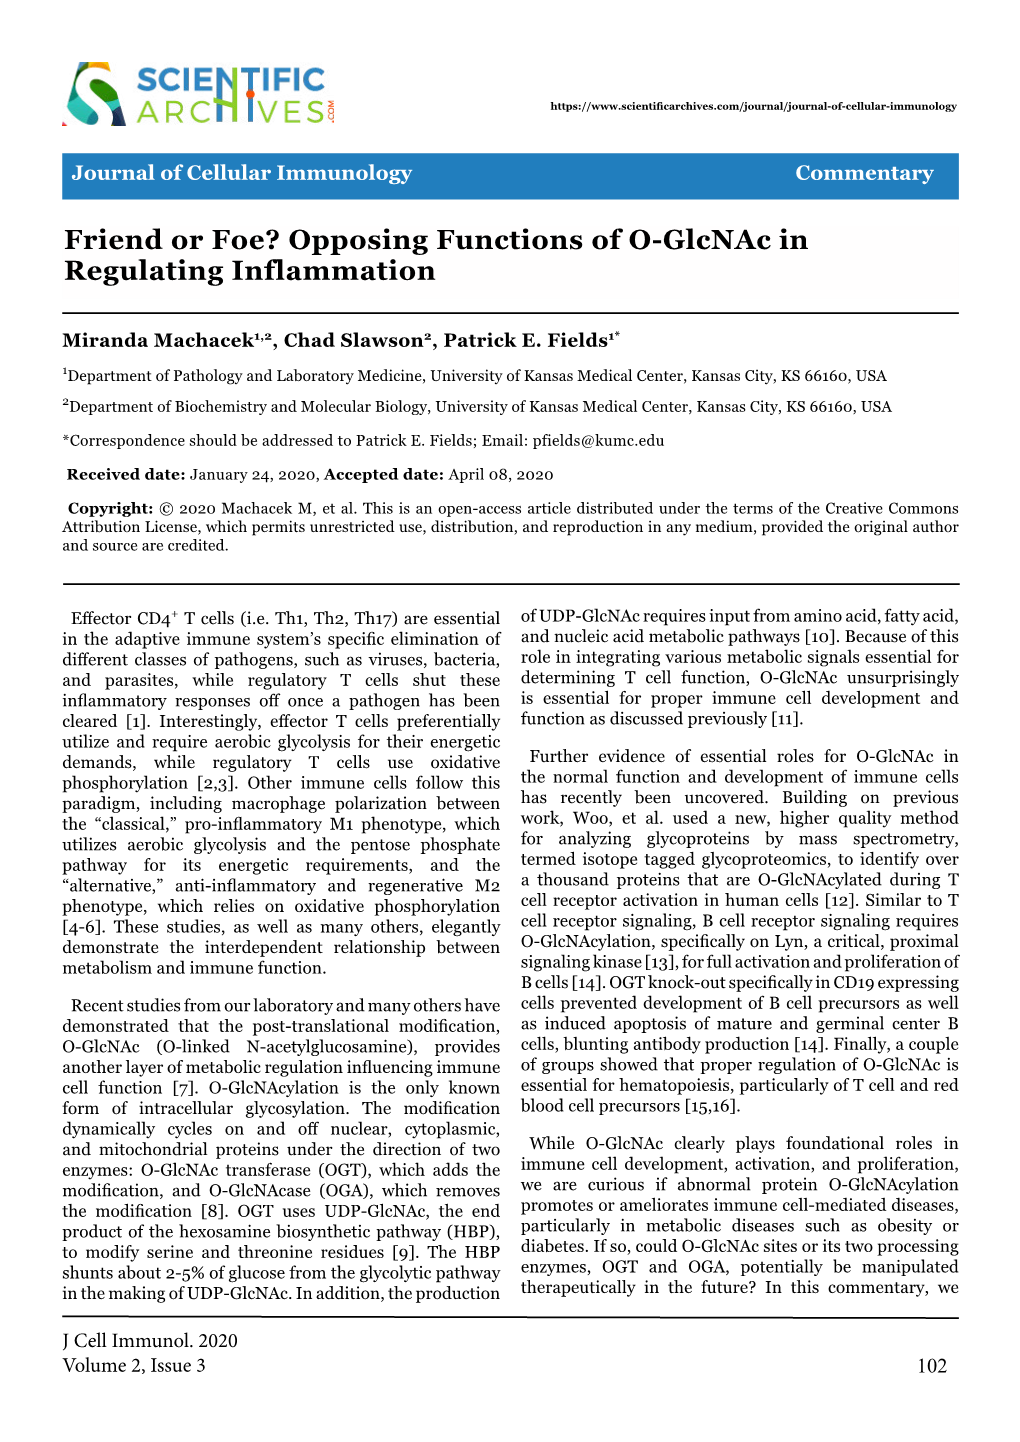 Friend Or Foe? Opposing Functions of O-Glcnac in Regulating Inflammation